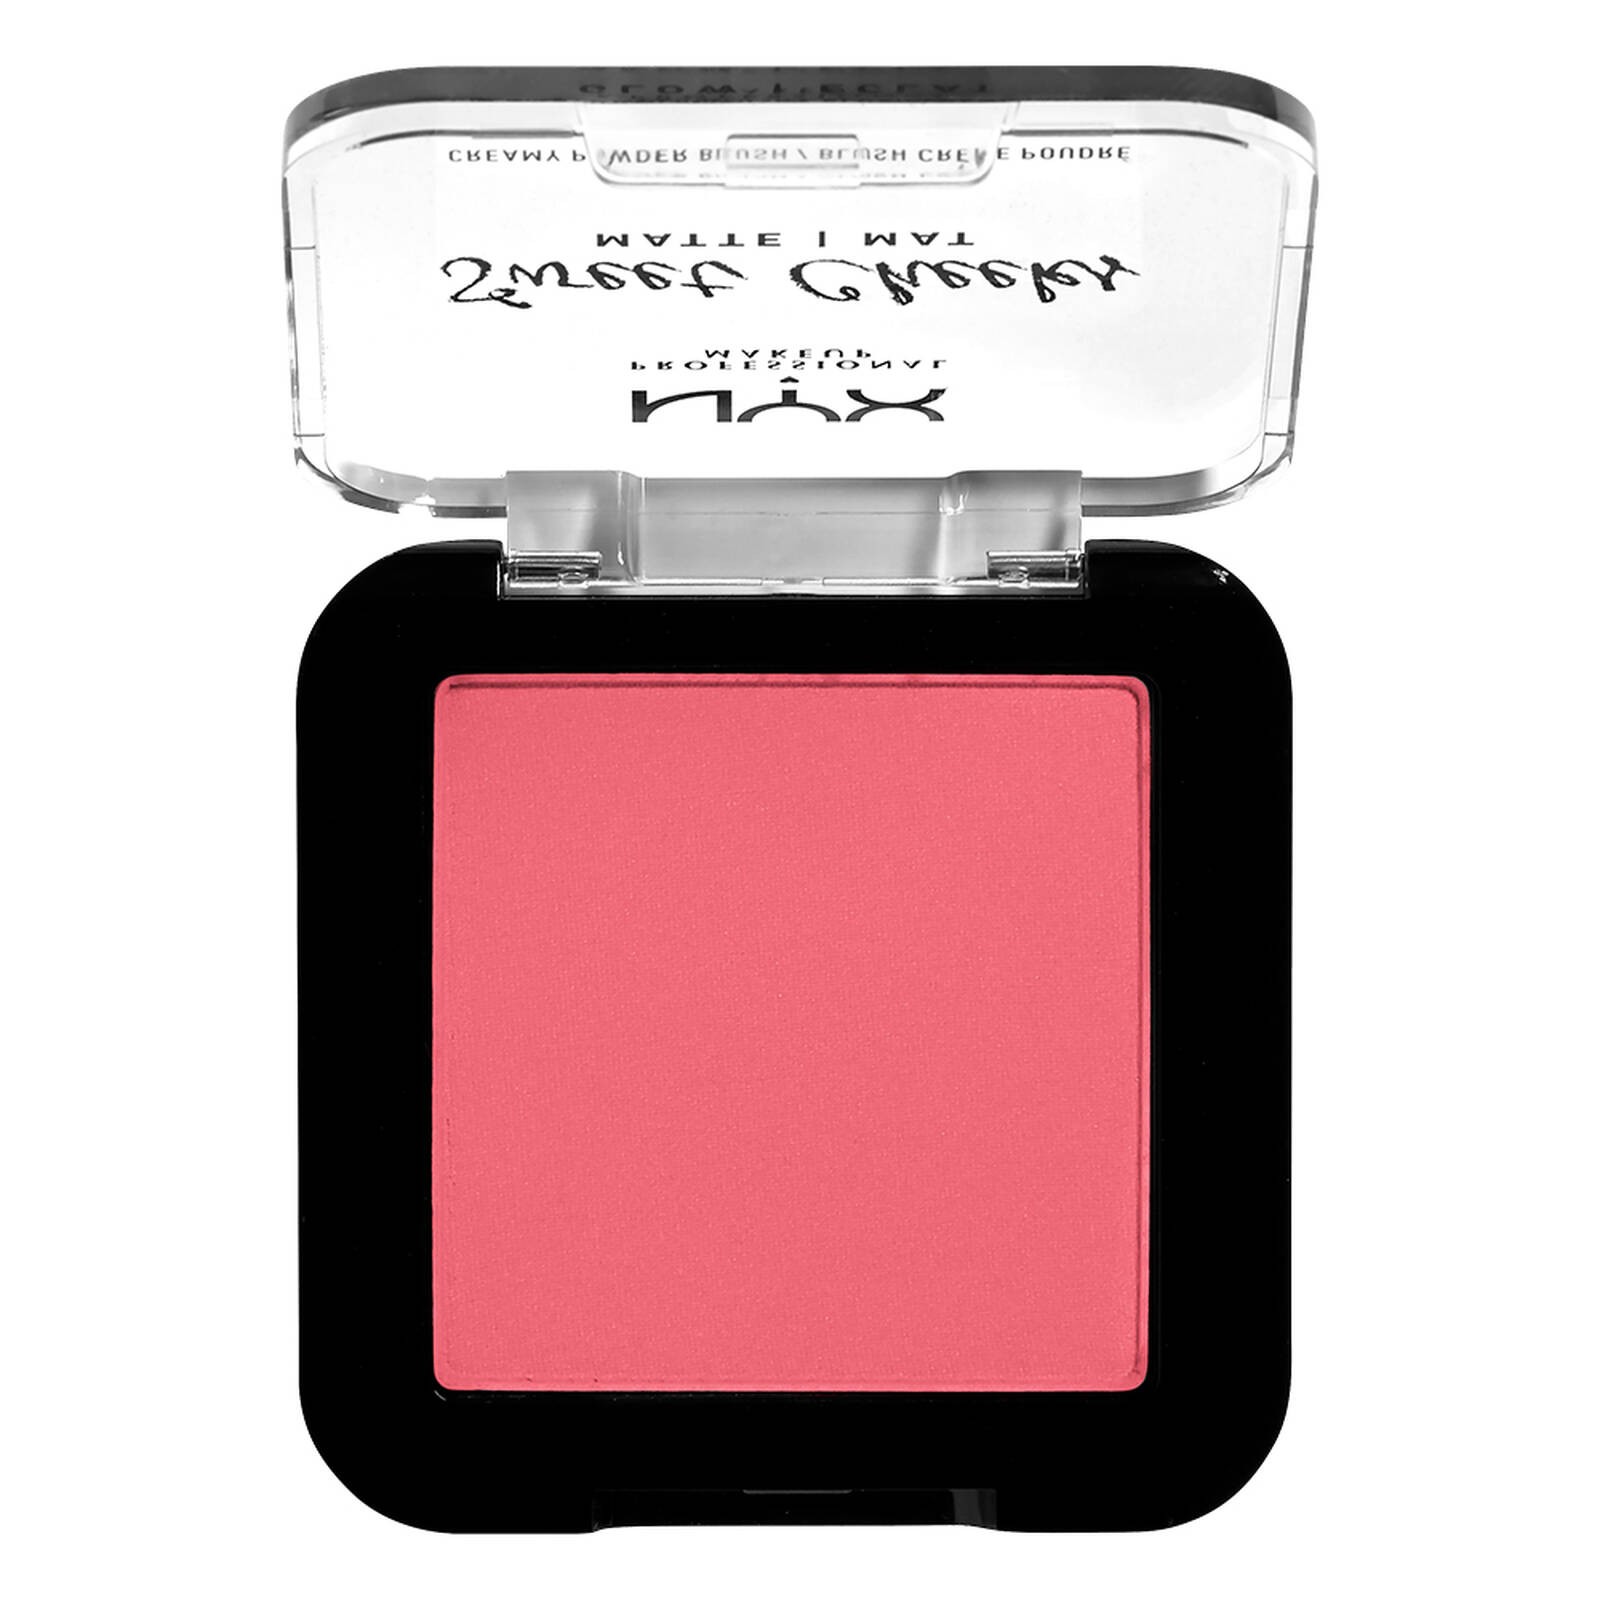 Rouge - Sweet Cheeks Creamy Powder Blush Matte